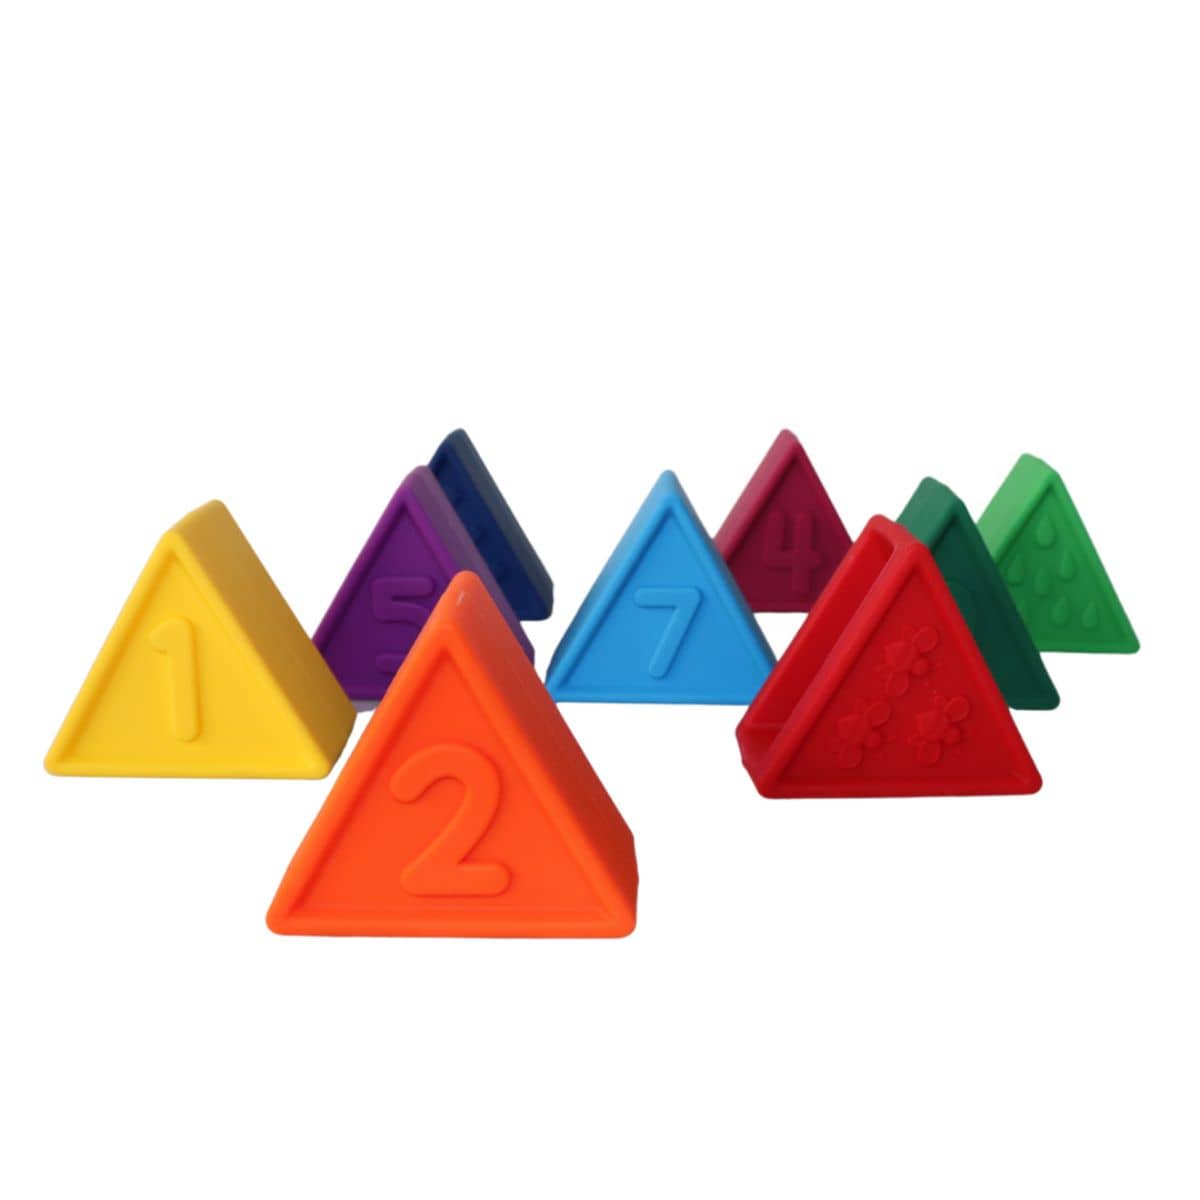 Jellystone Designs Triblox Silicone Blocks - Rainbow Bright